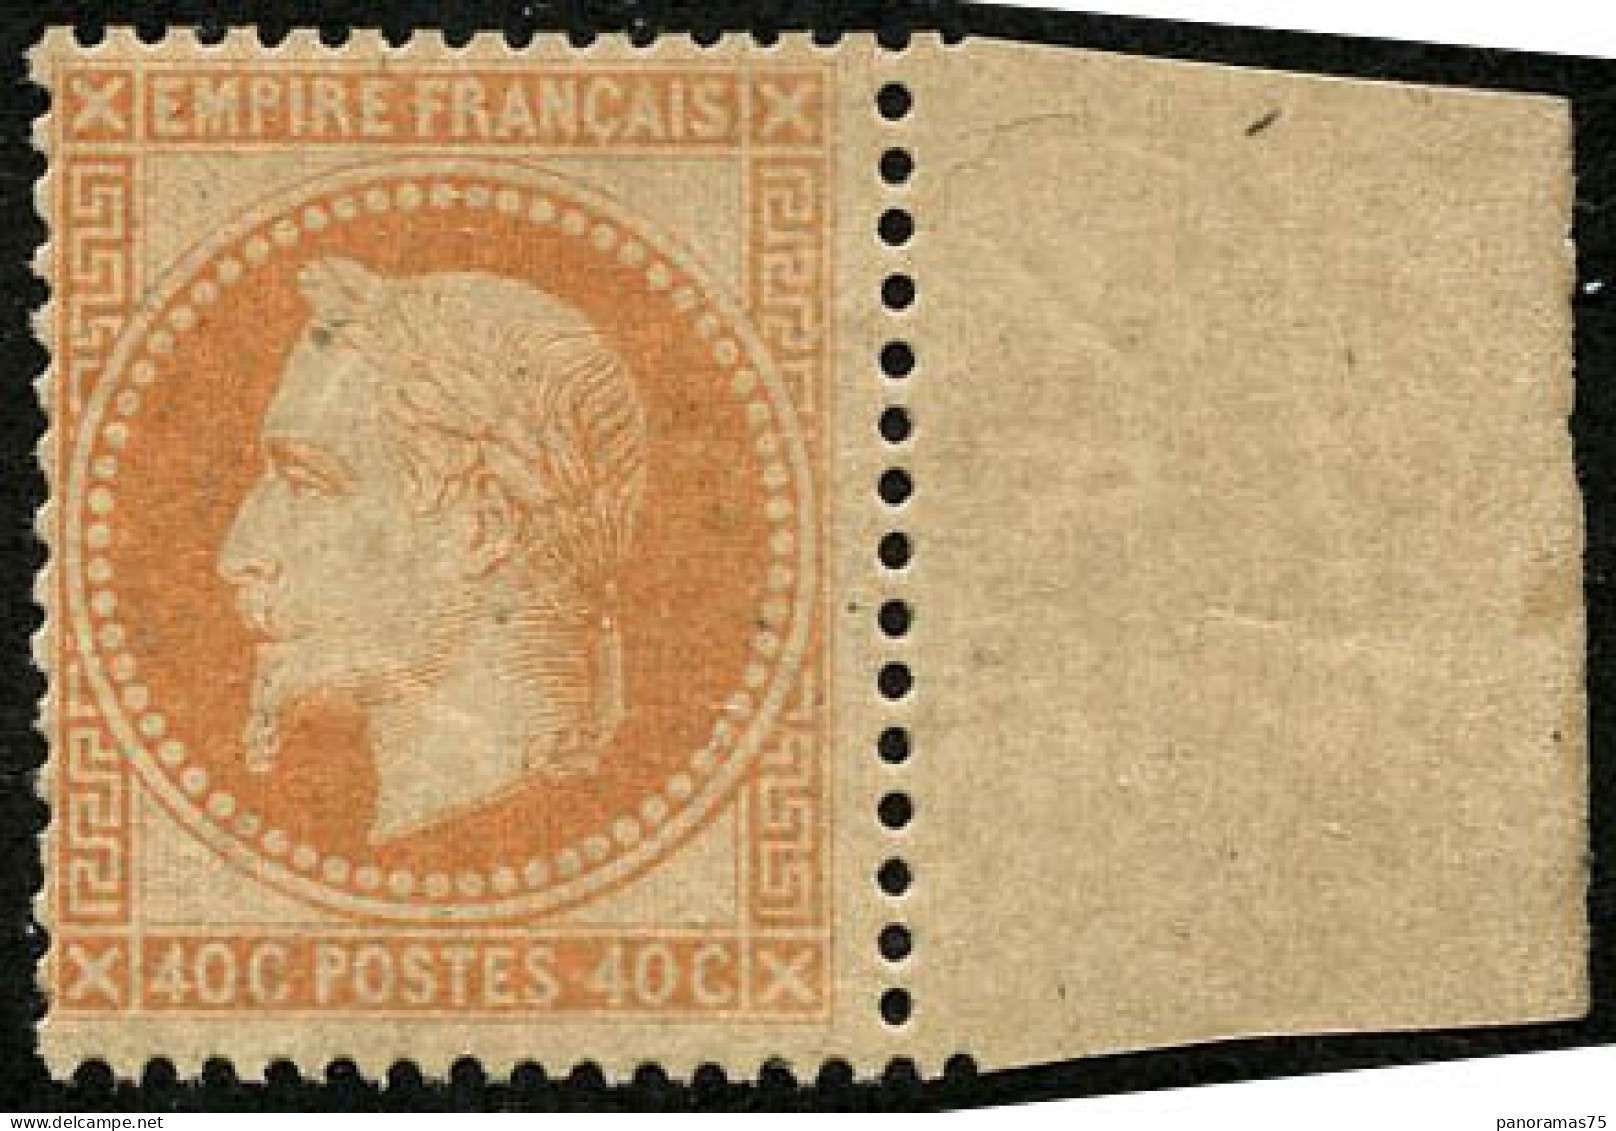 * N°31 40c Orange - TB - 1863-1870 Napoléon III Lauré